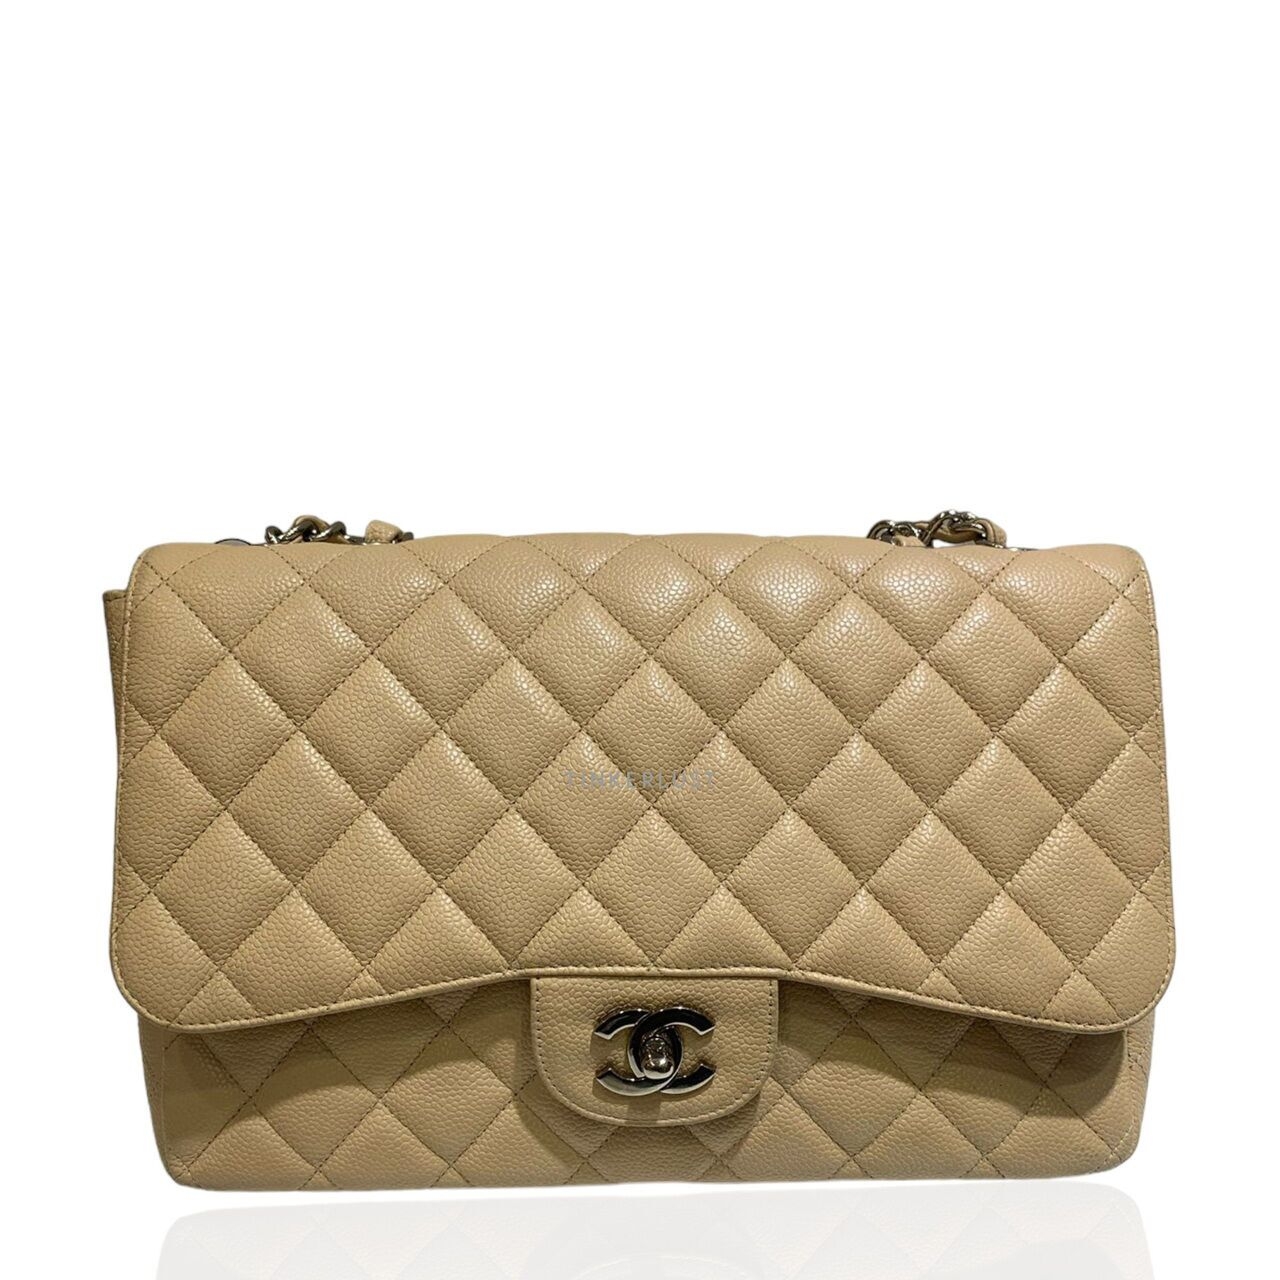 Chanel Classic Jumbo Single Flap Beige Caviar SHW #12 Shoulder Bag